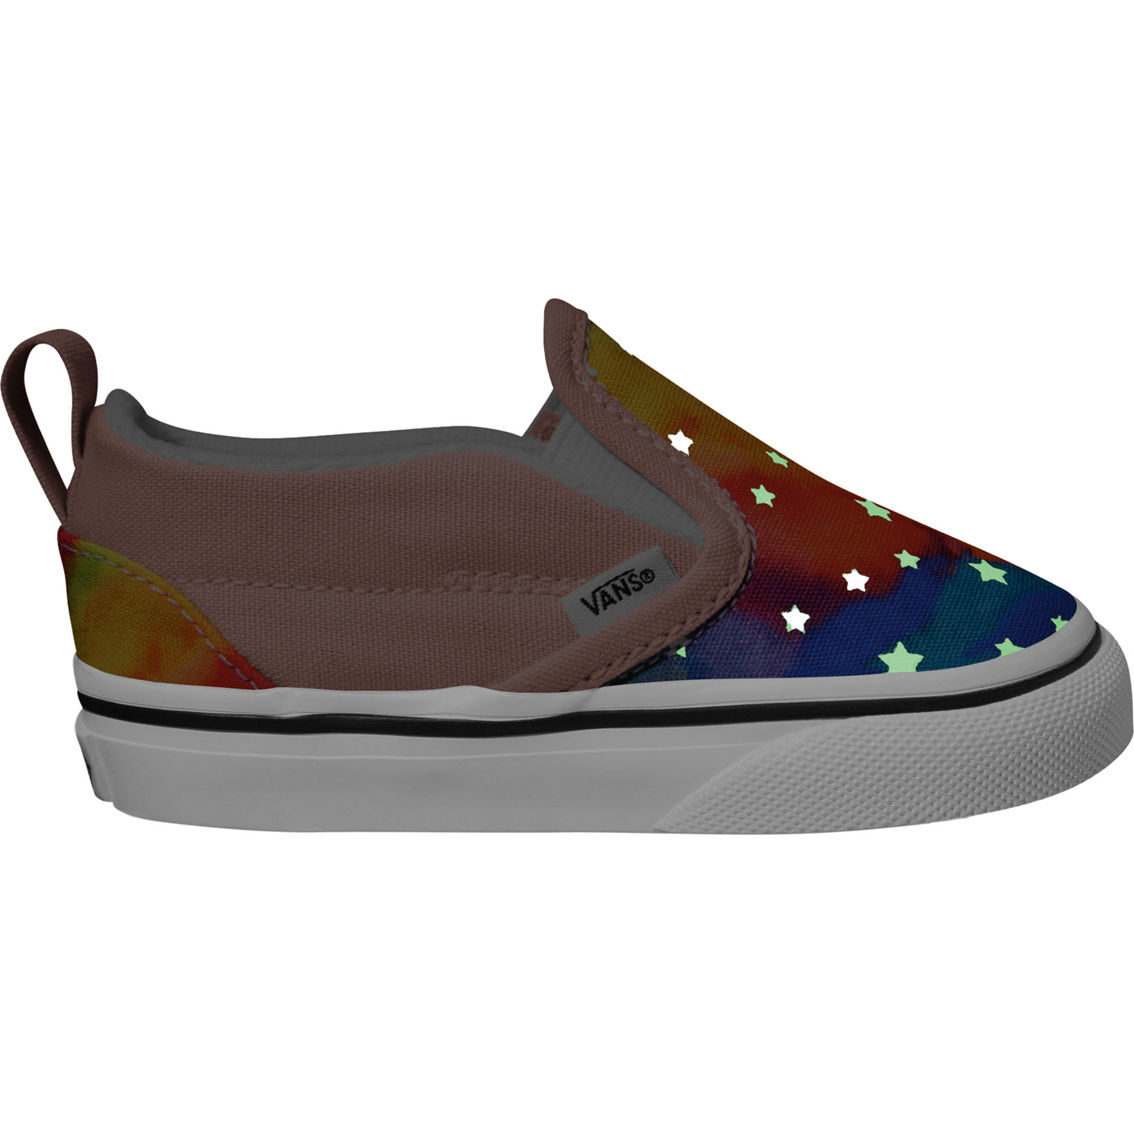 Vans Toddler Girls Slip-On V Rainbow Galaxy Sneakers - Image 2 of 2